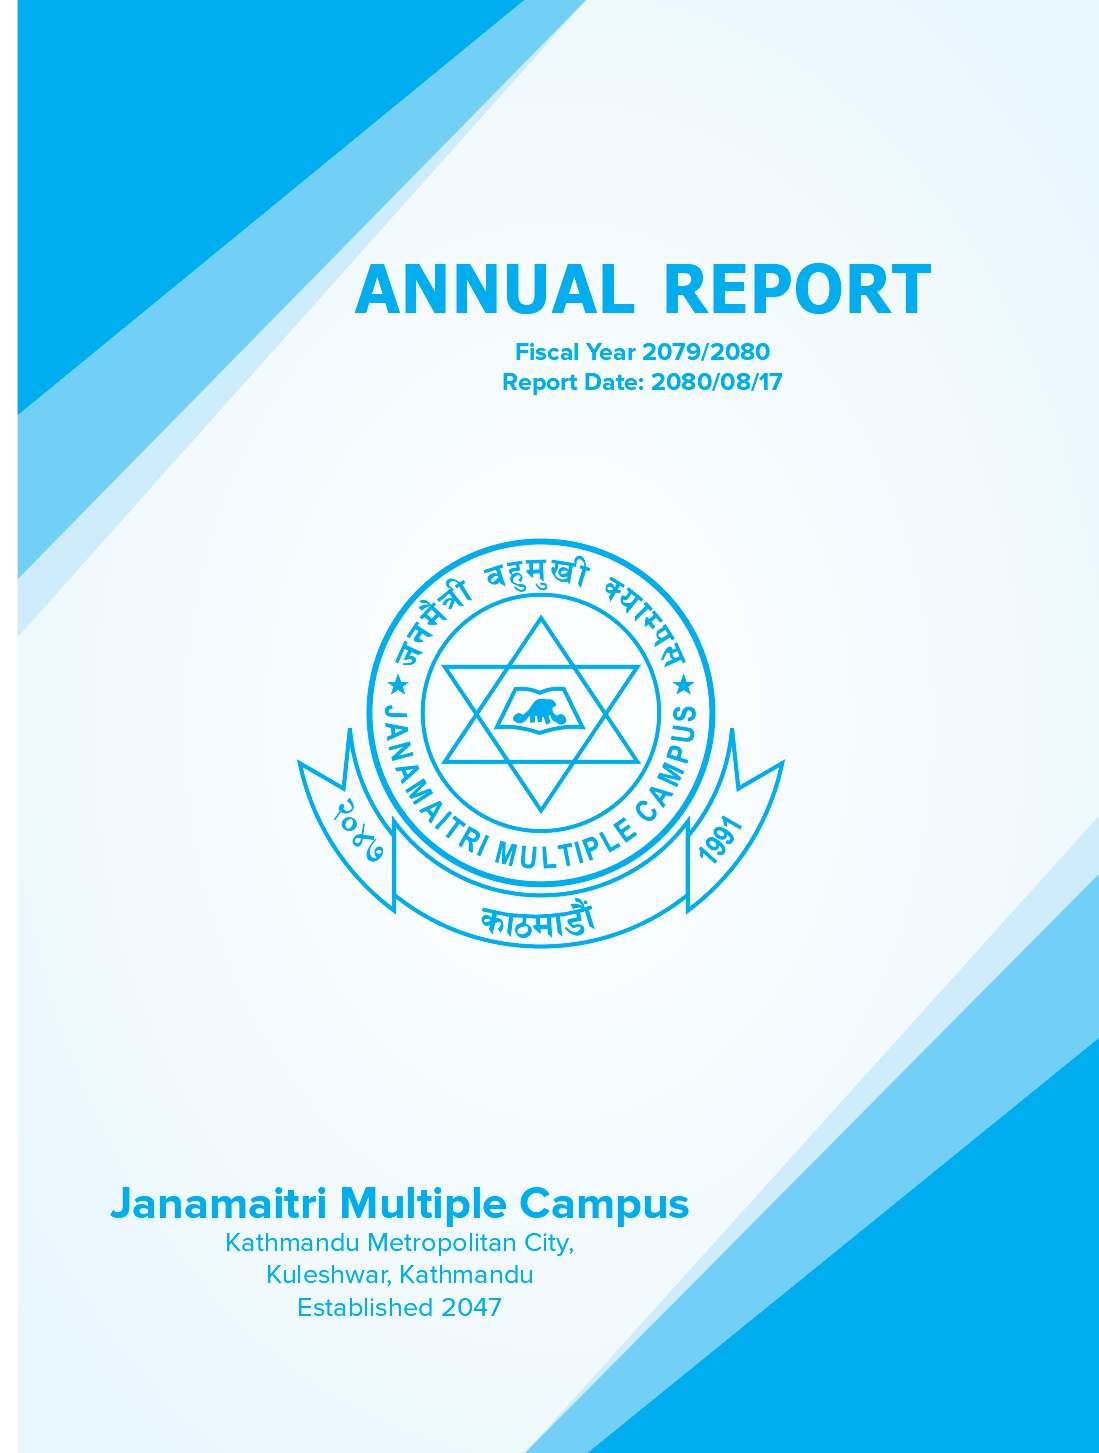 Annual Report 2079/80